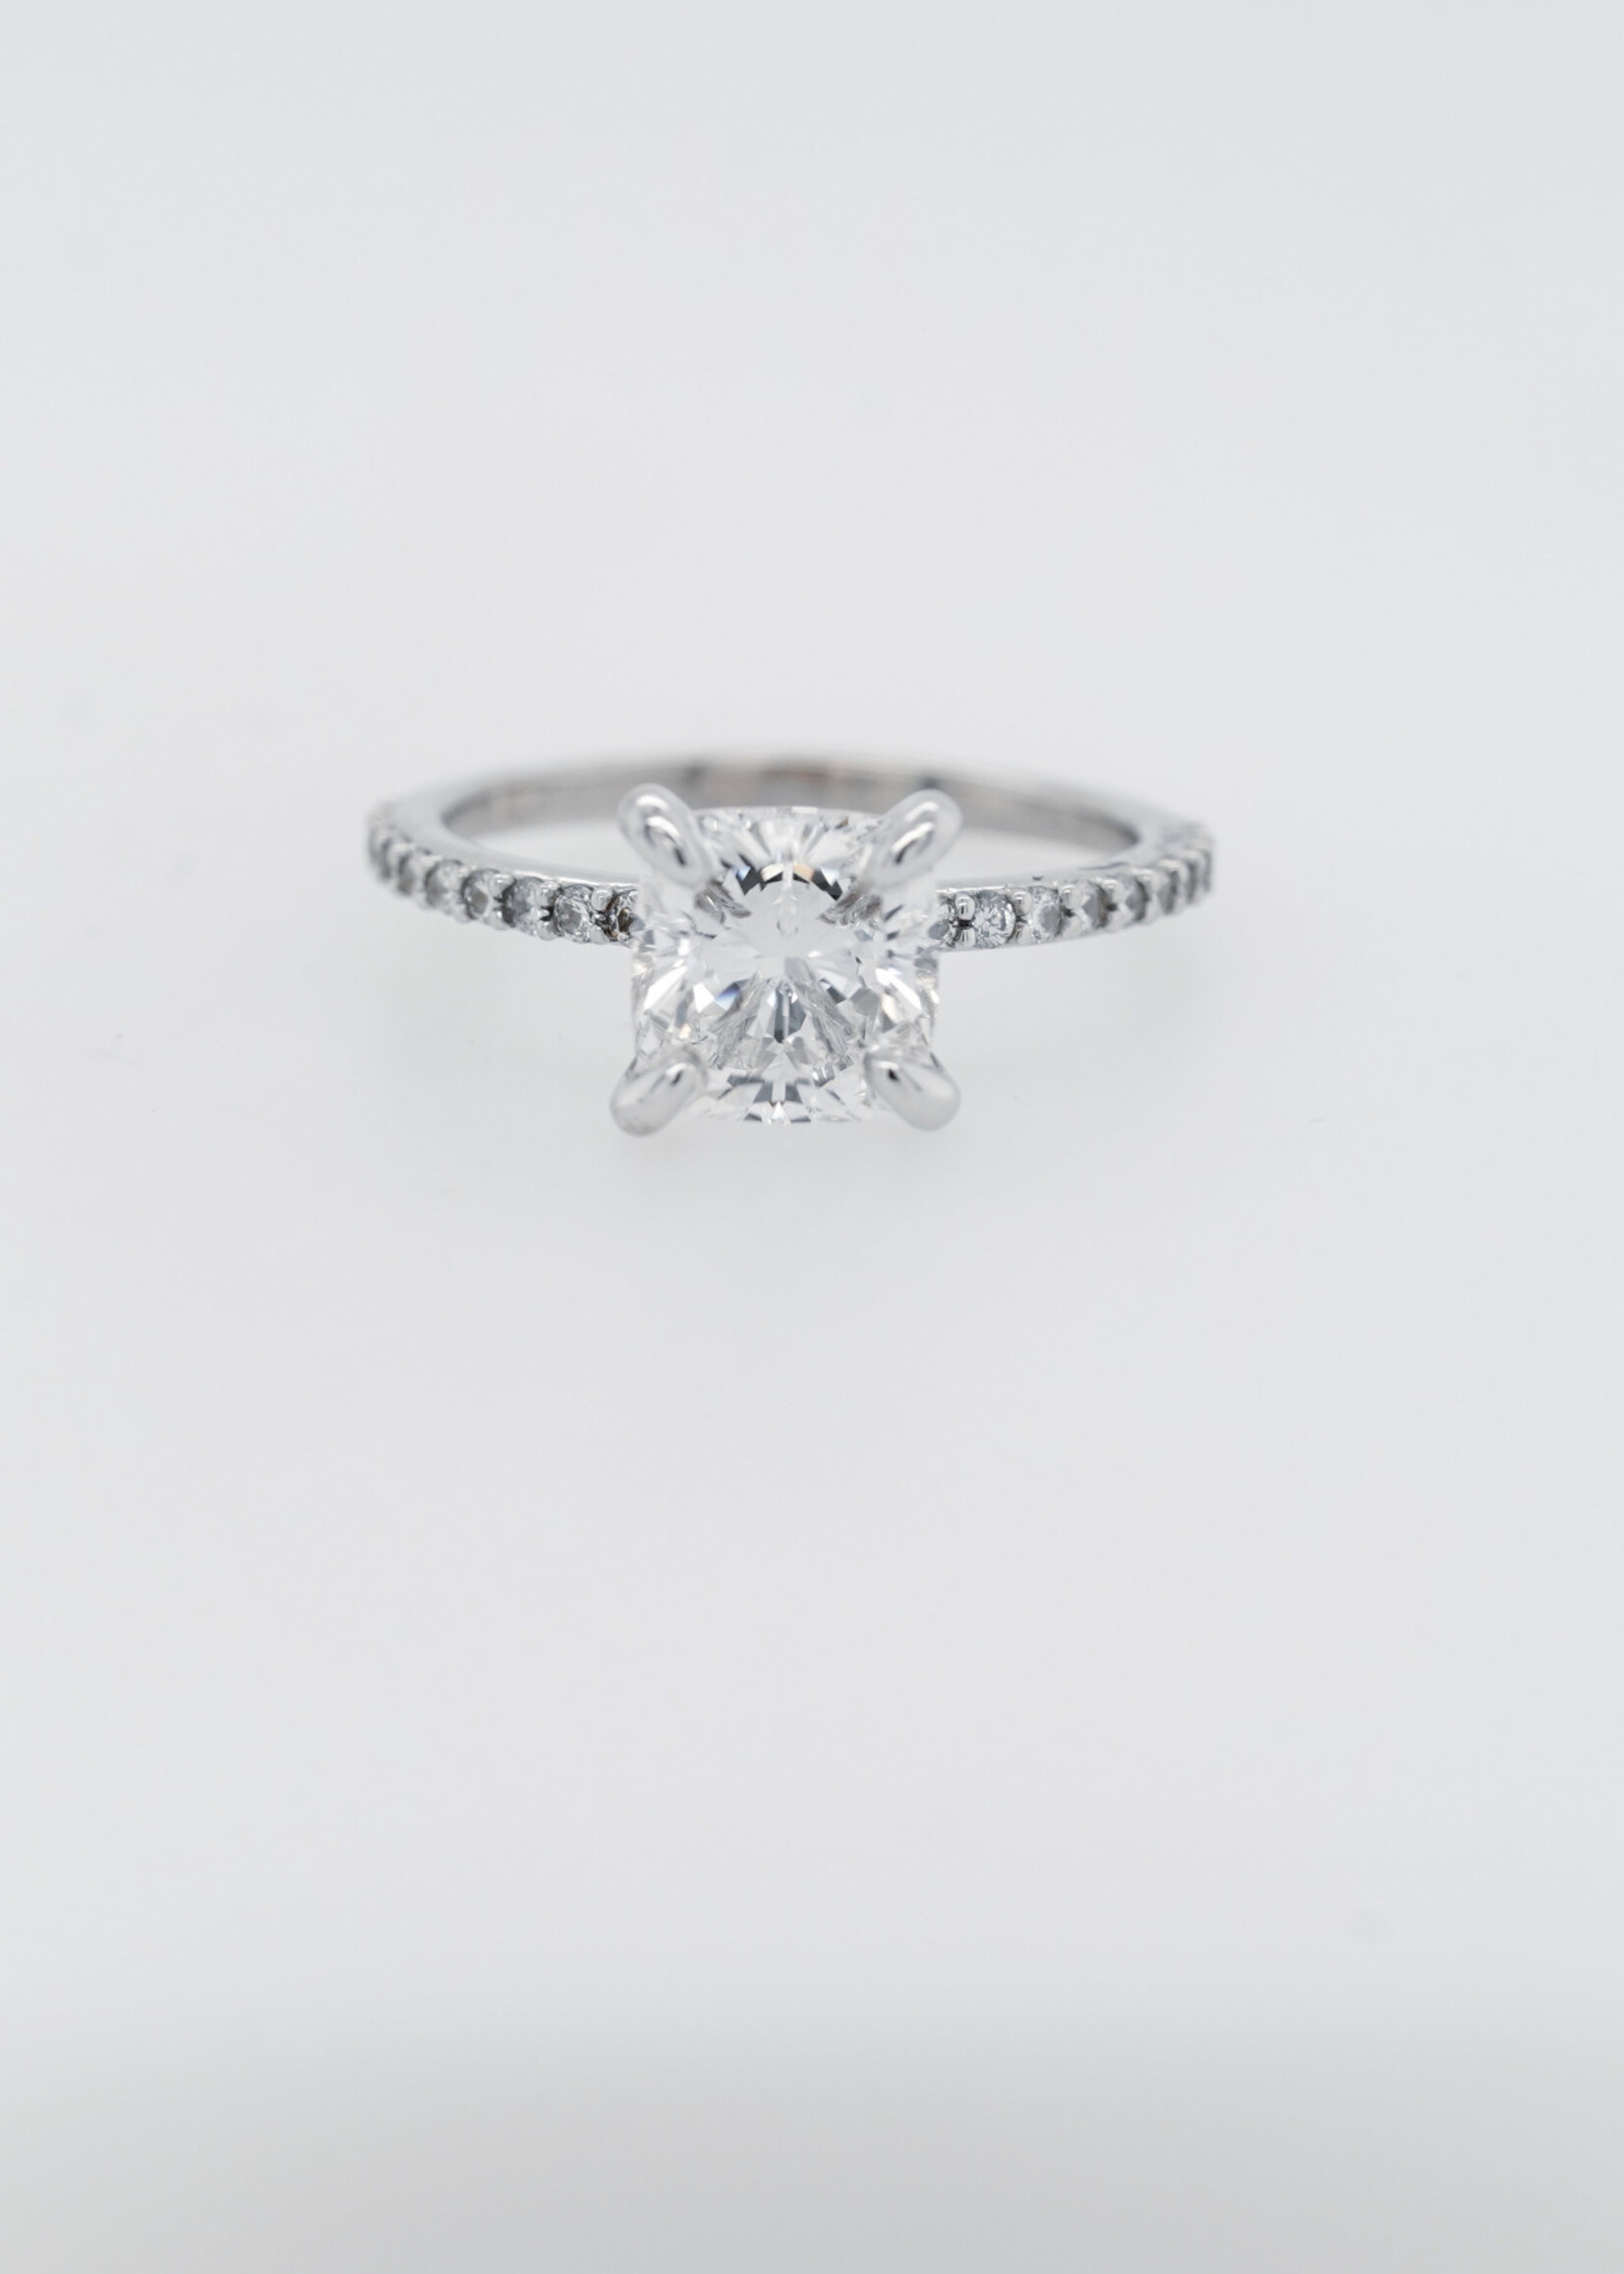 14KW 2.74g 2.23ctw (2.01ctr) D/VVS2 Cushion Diamond Engagement Ring (size 7)